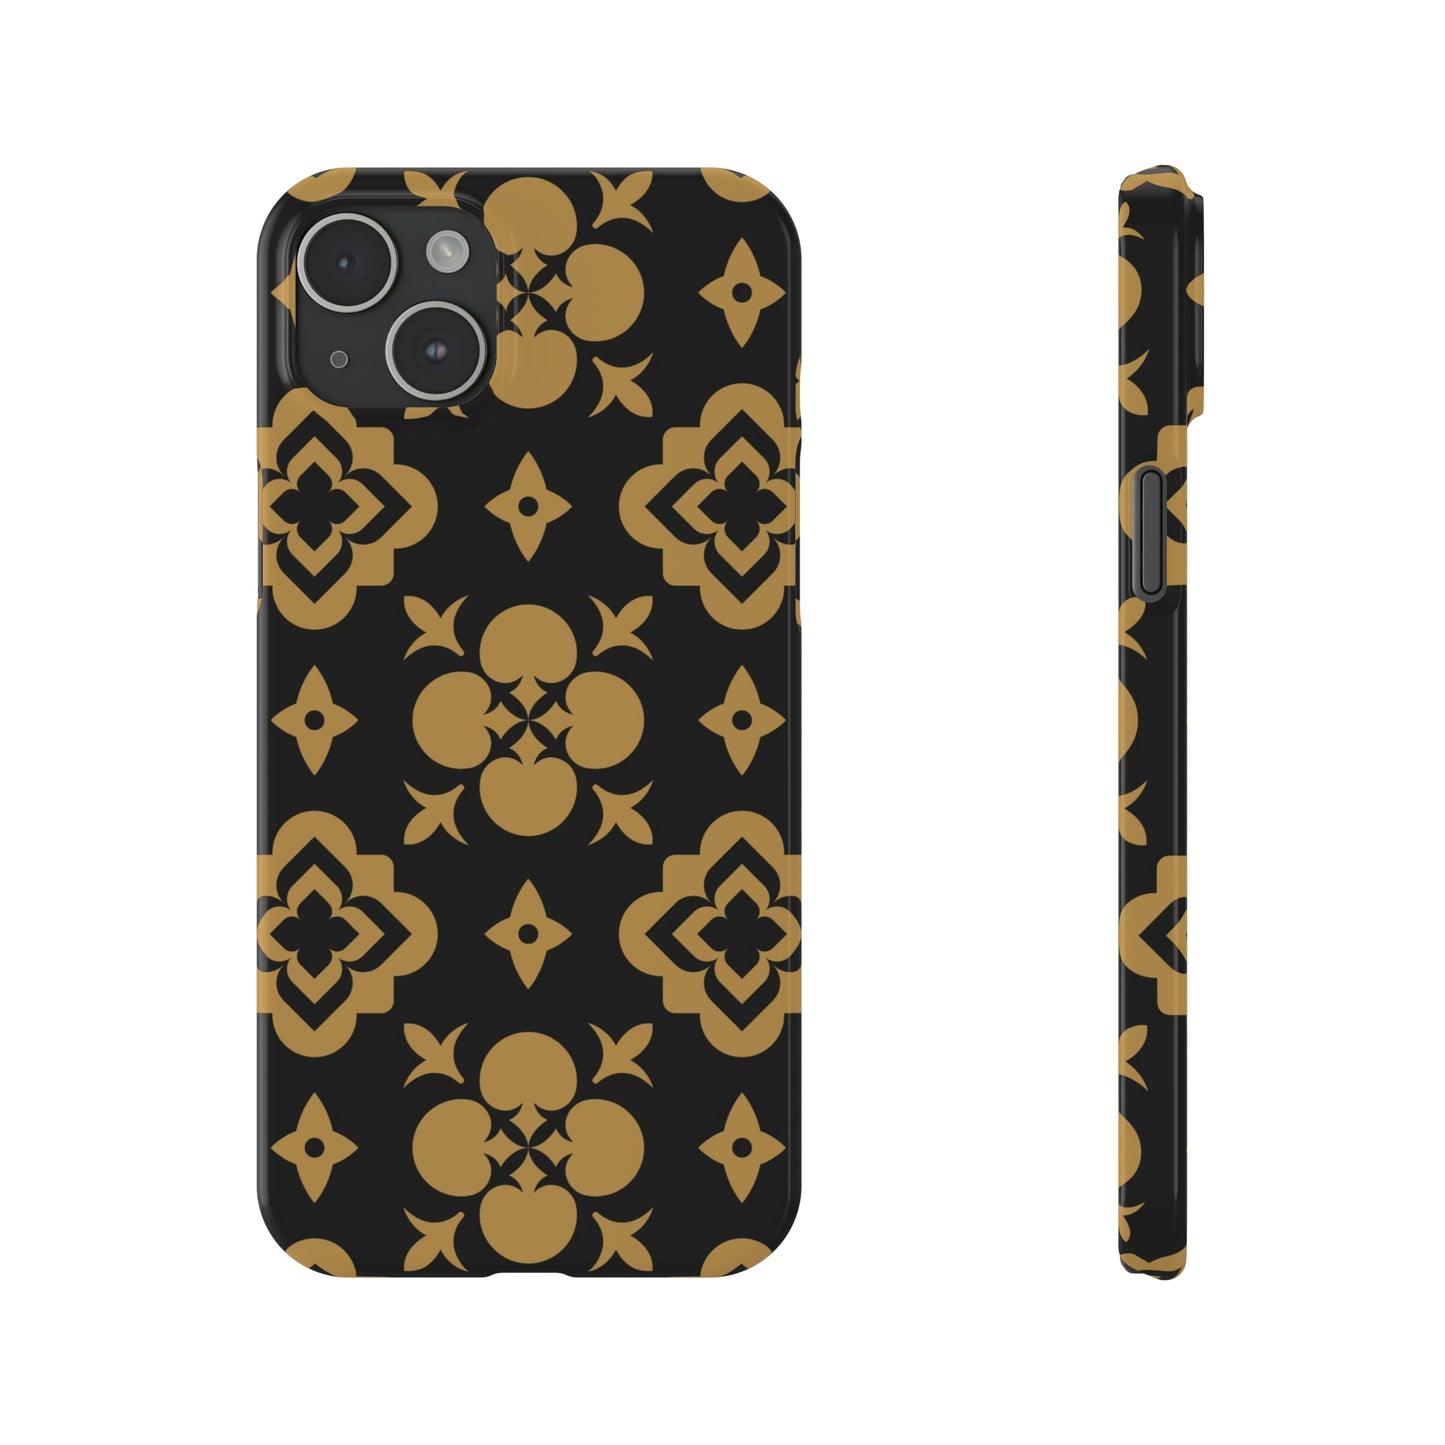 Geometric luxury iPhone case